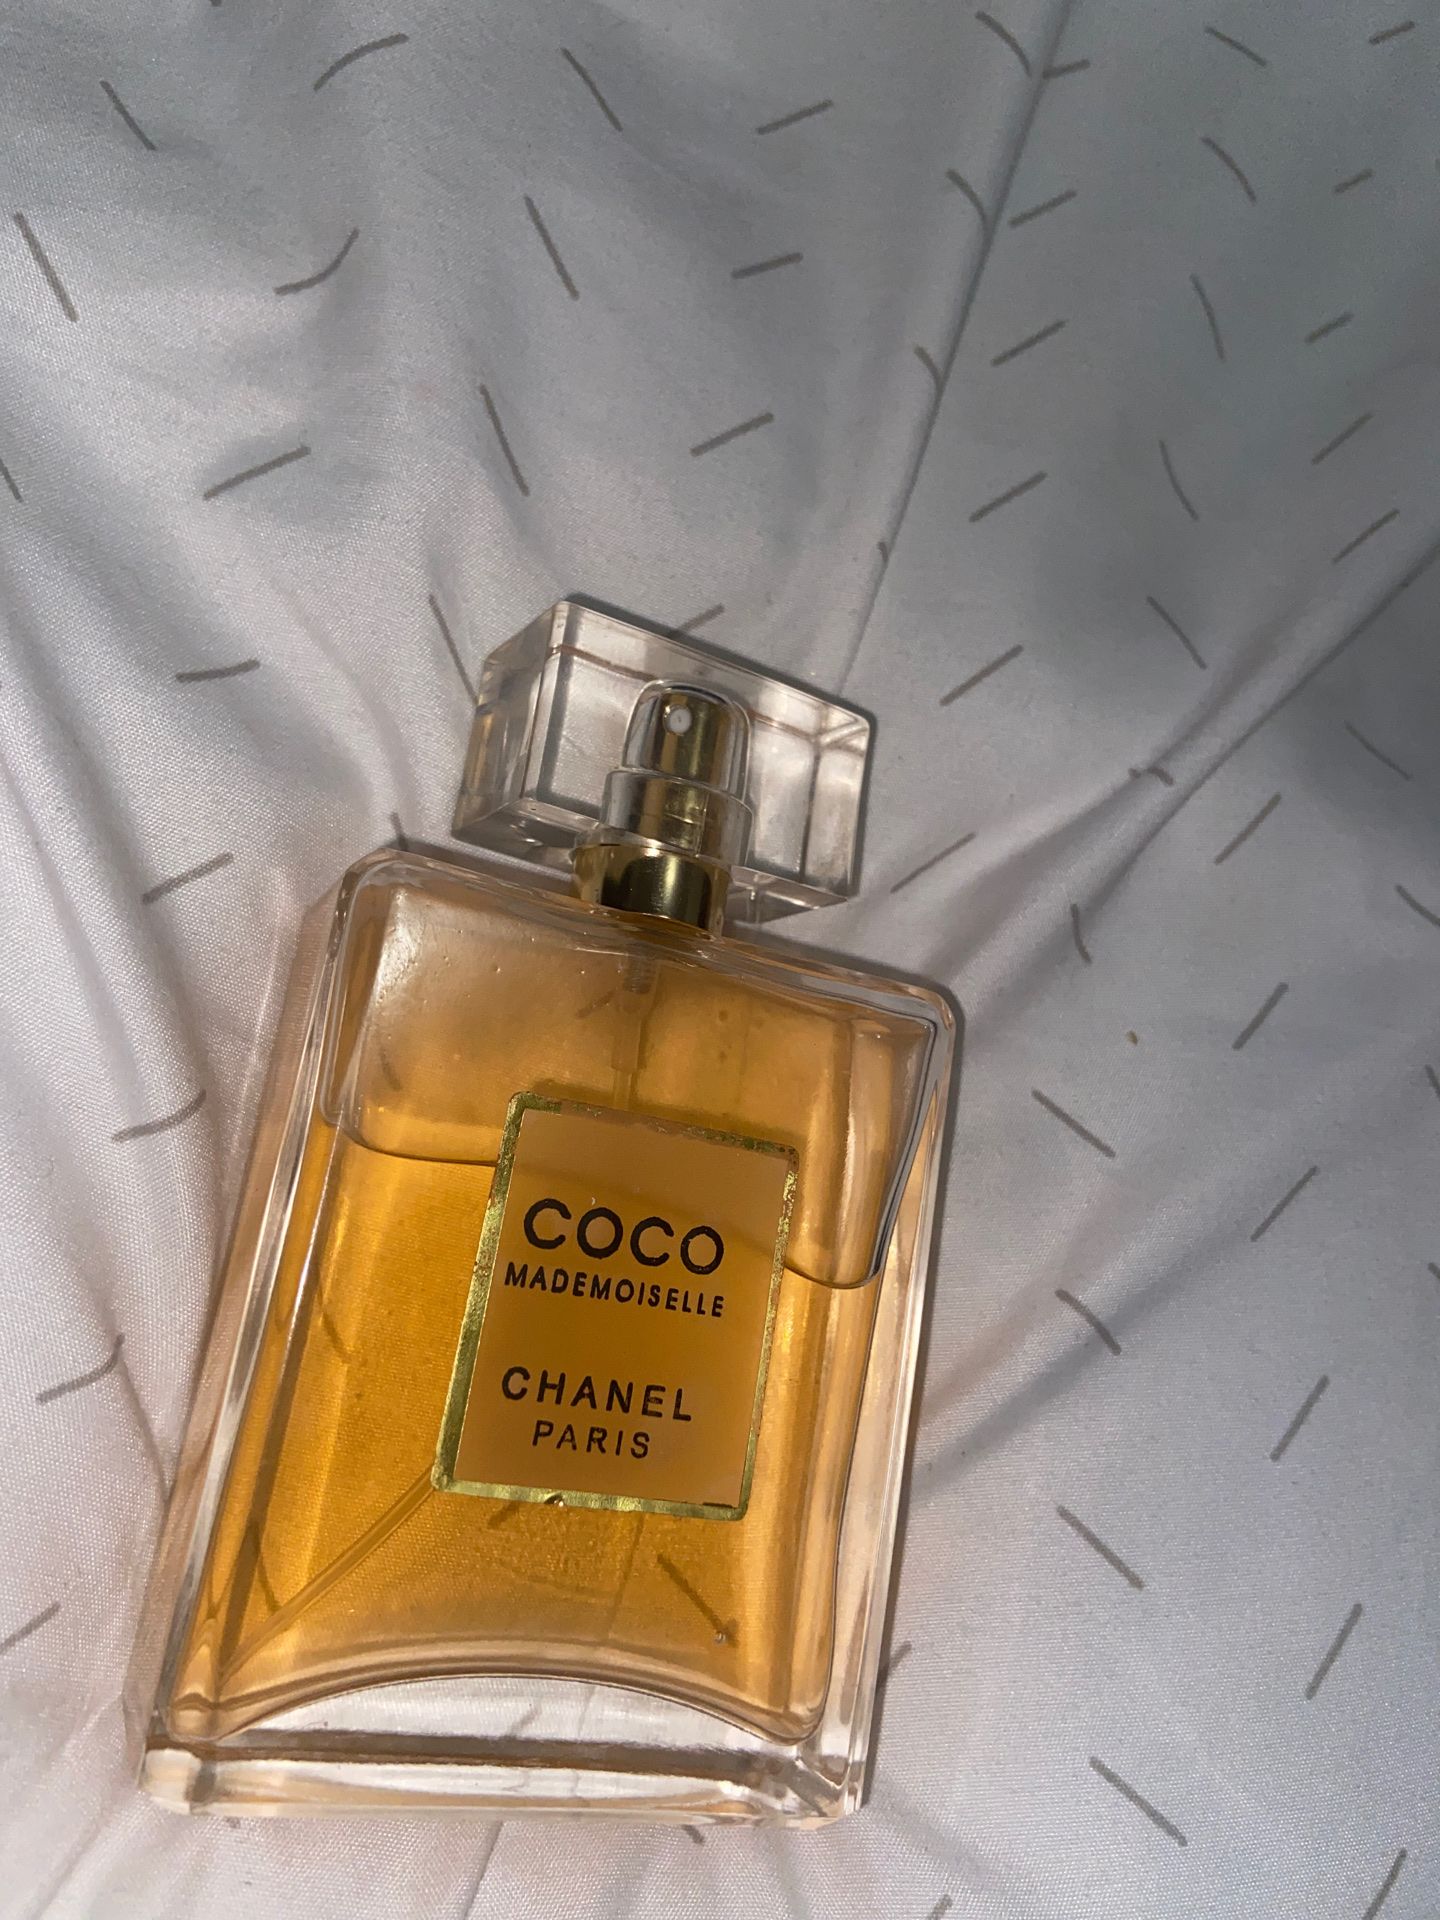 Coco mademoiselle Chanel Paris perfume